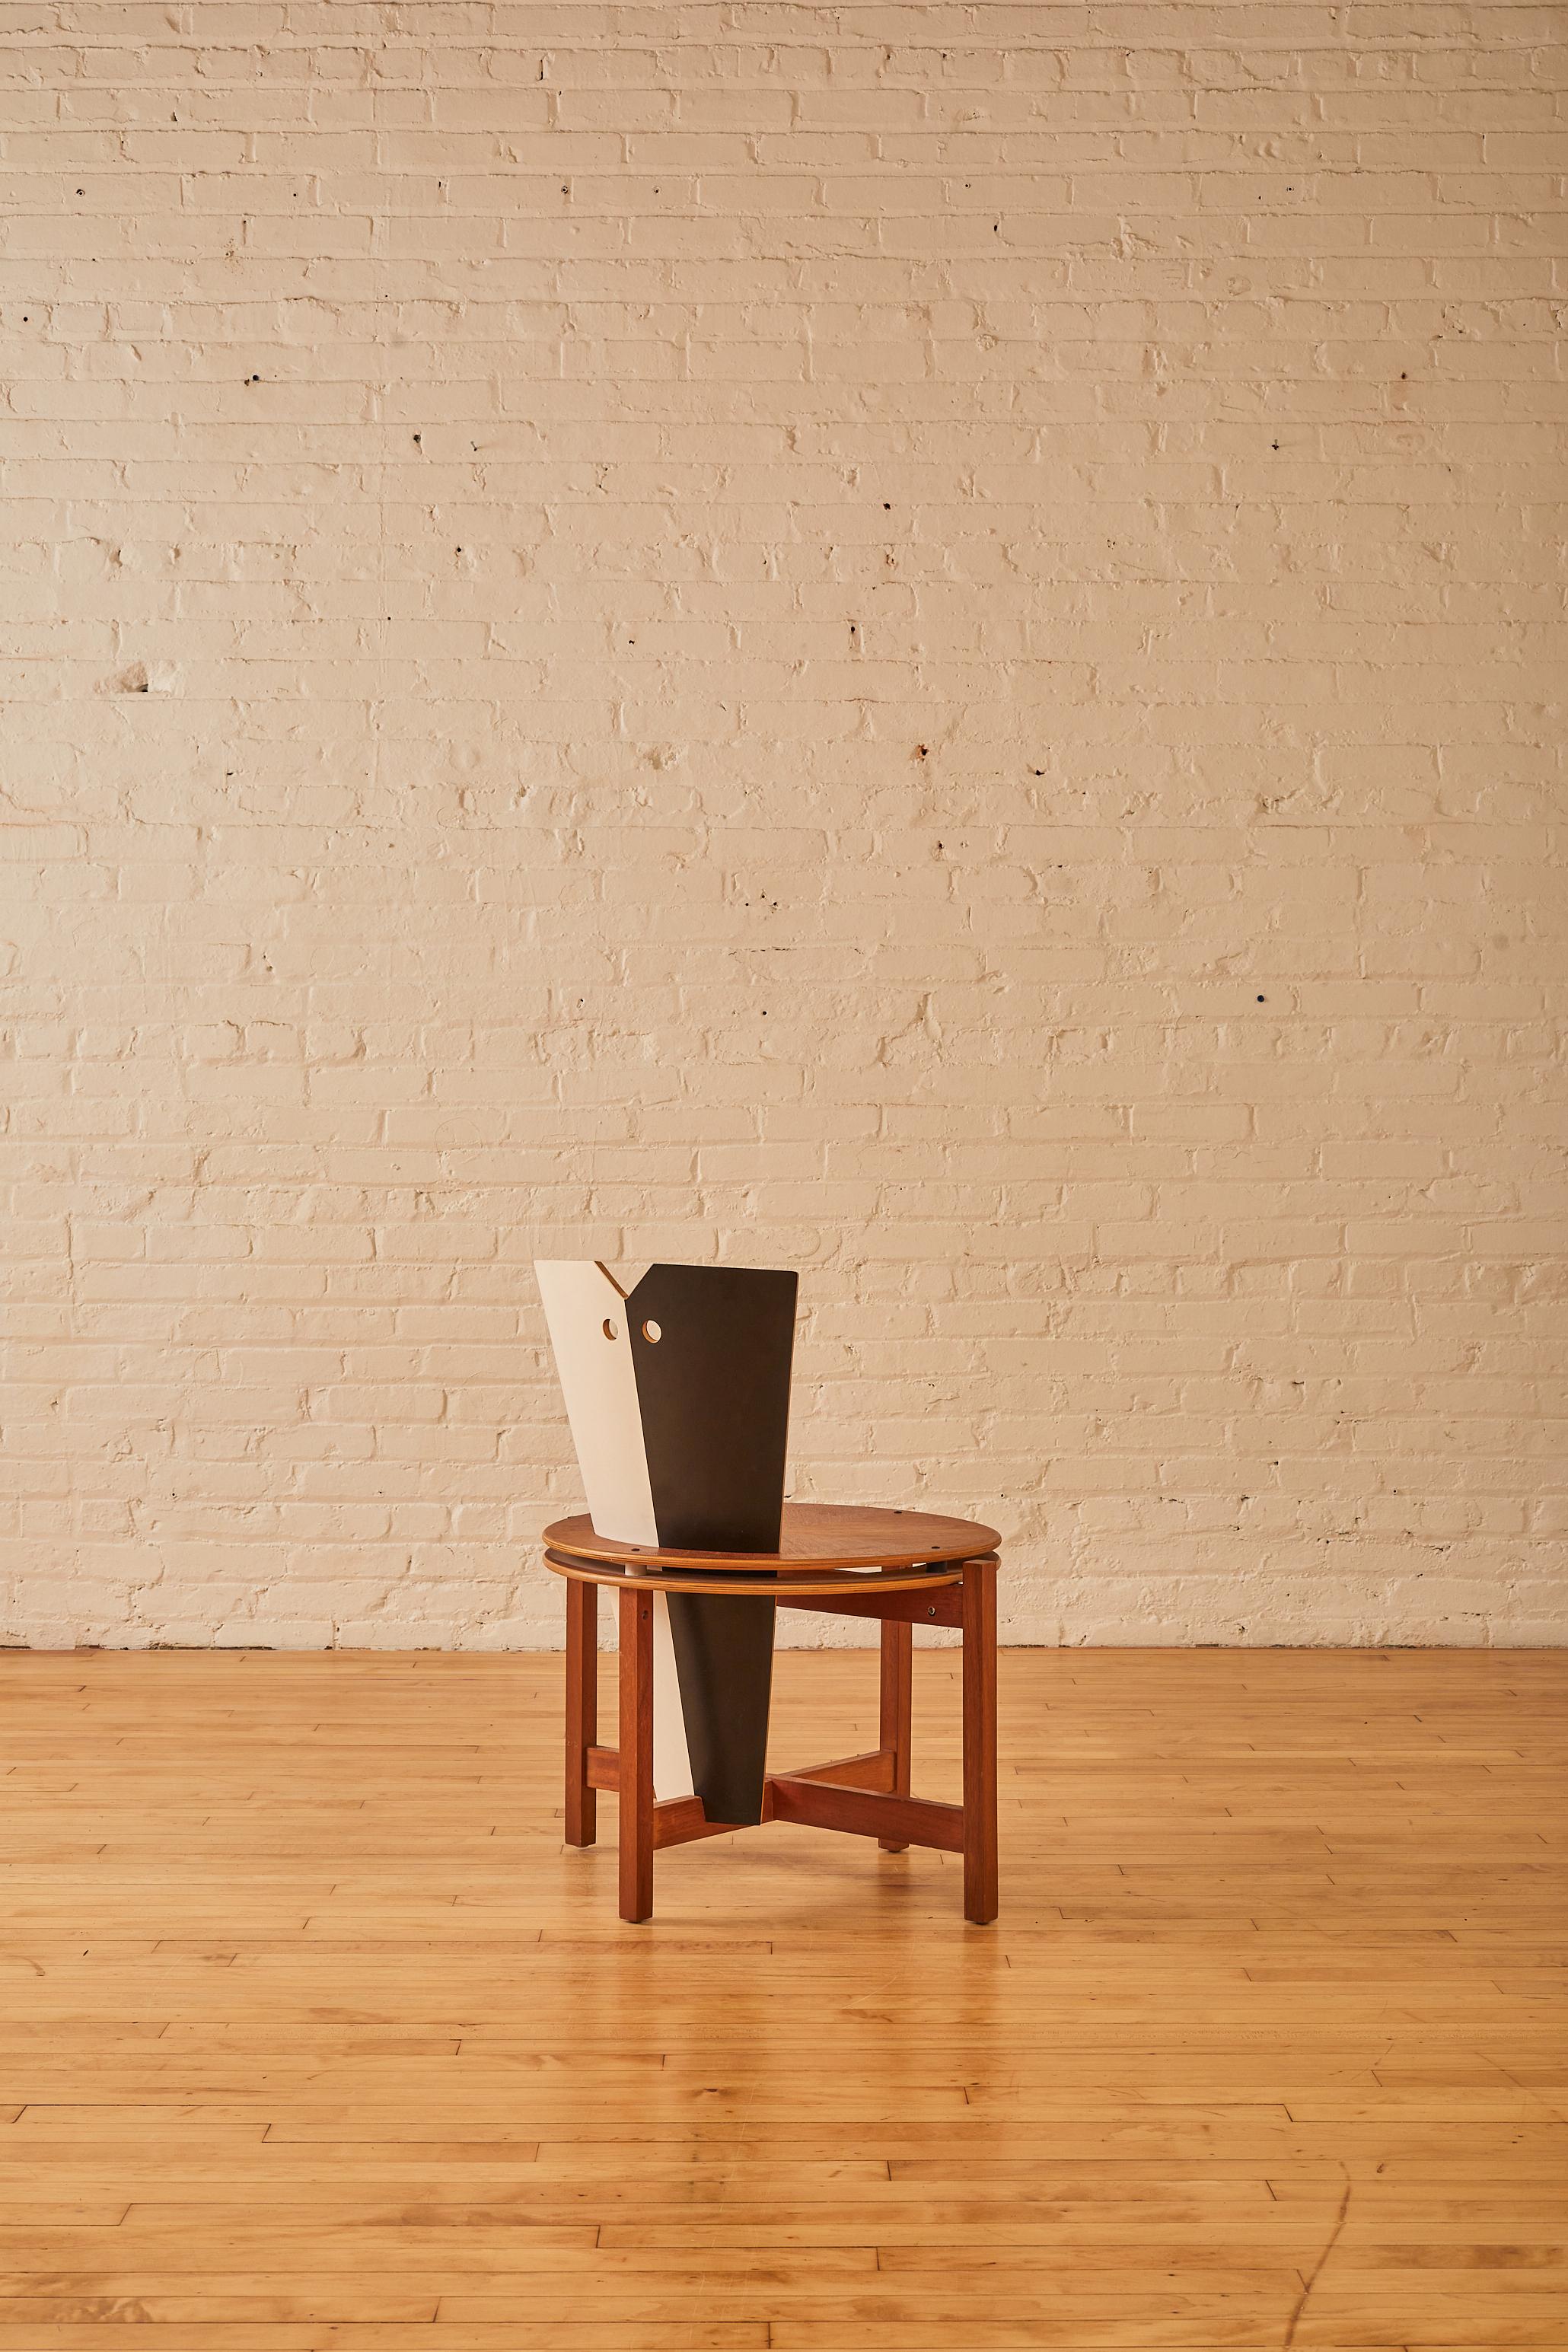 Masque Chair by James Evanson for Evanson Studios.